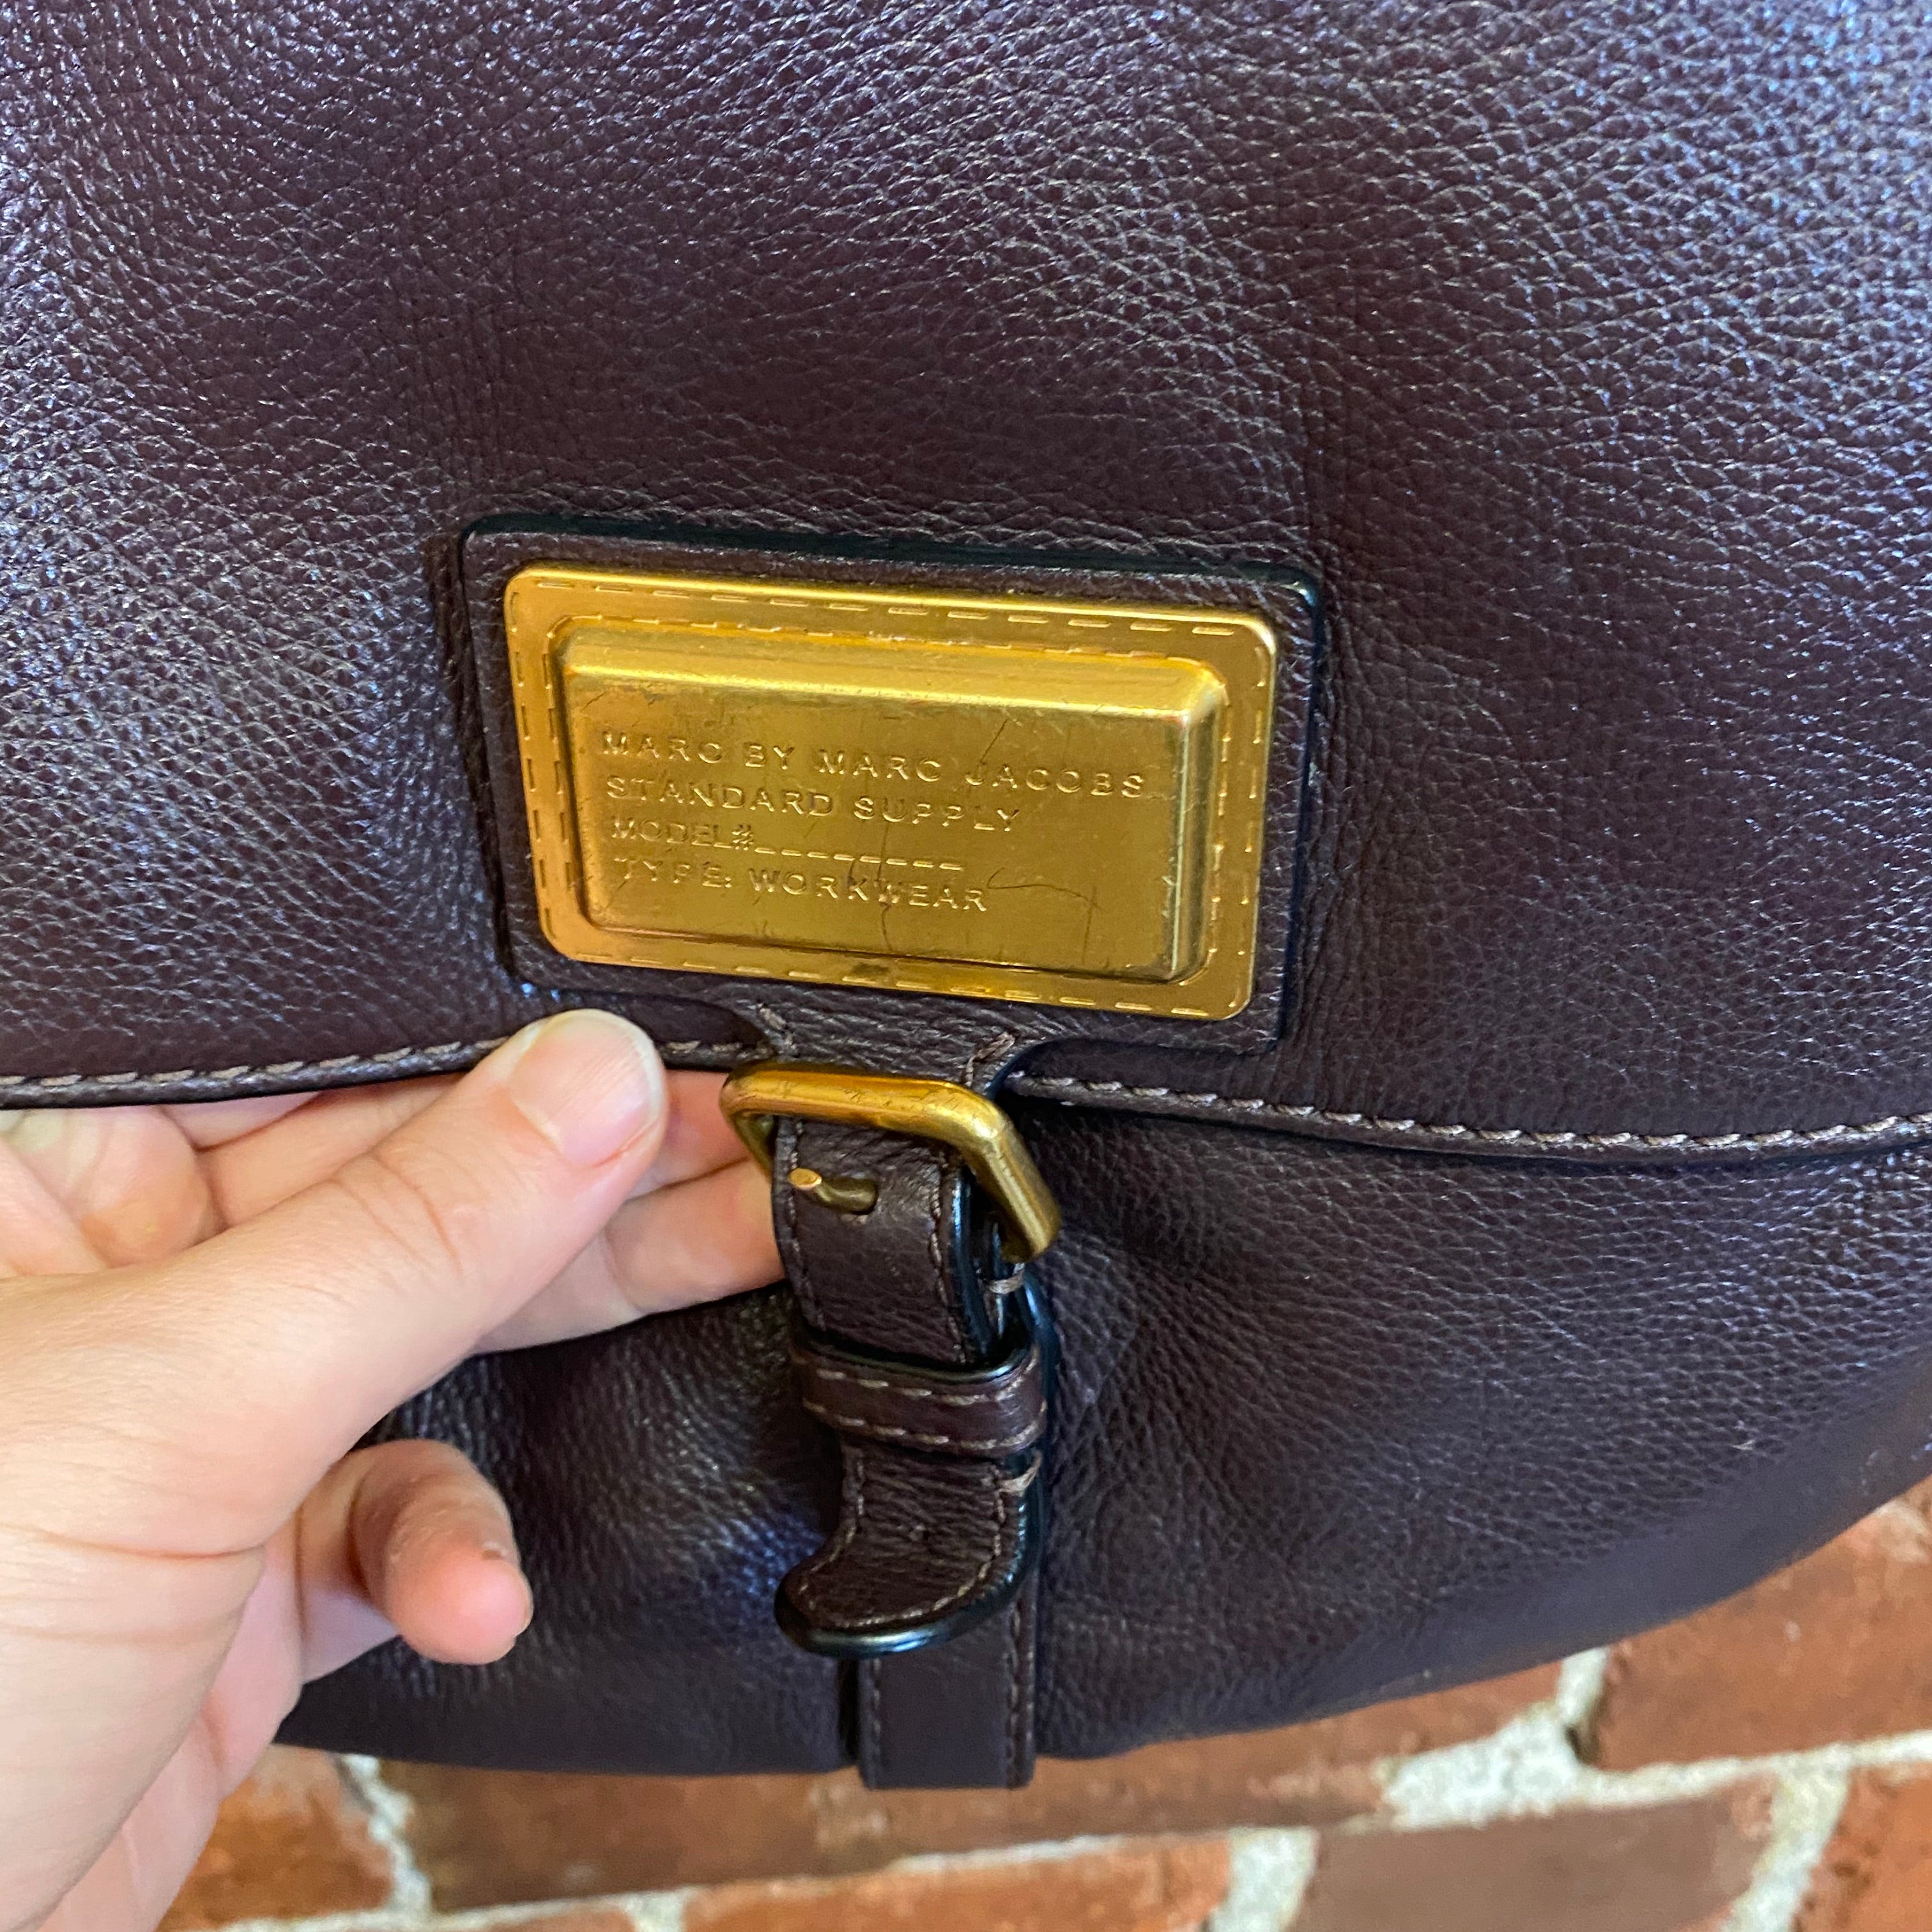 MARC JACOBS leather messenger handbag